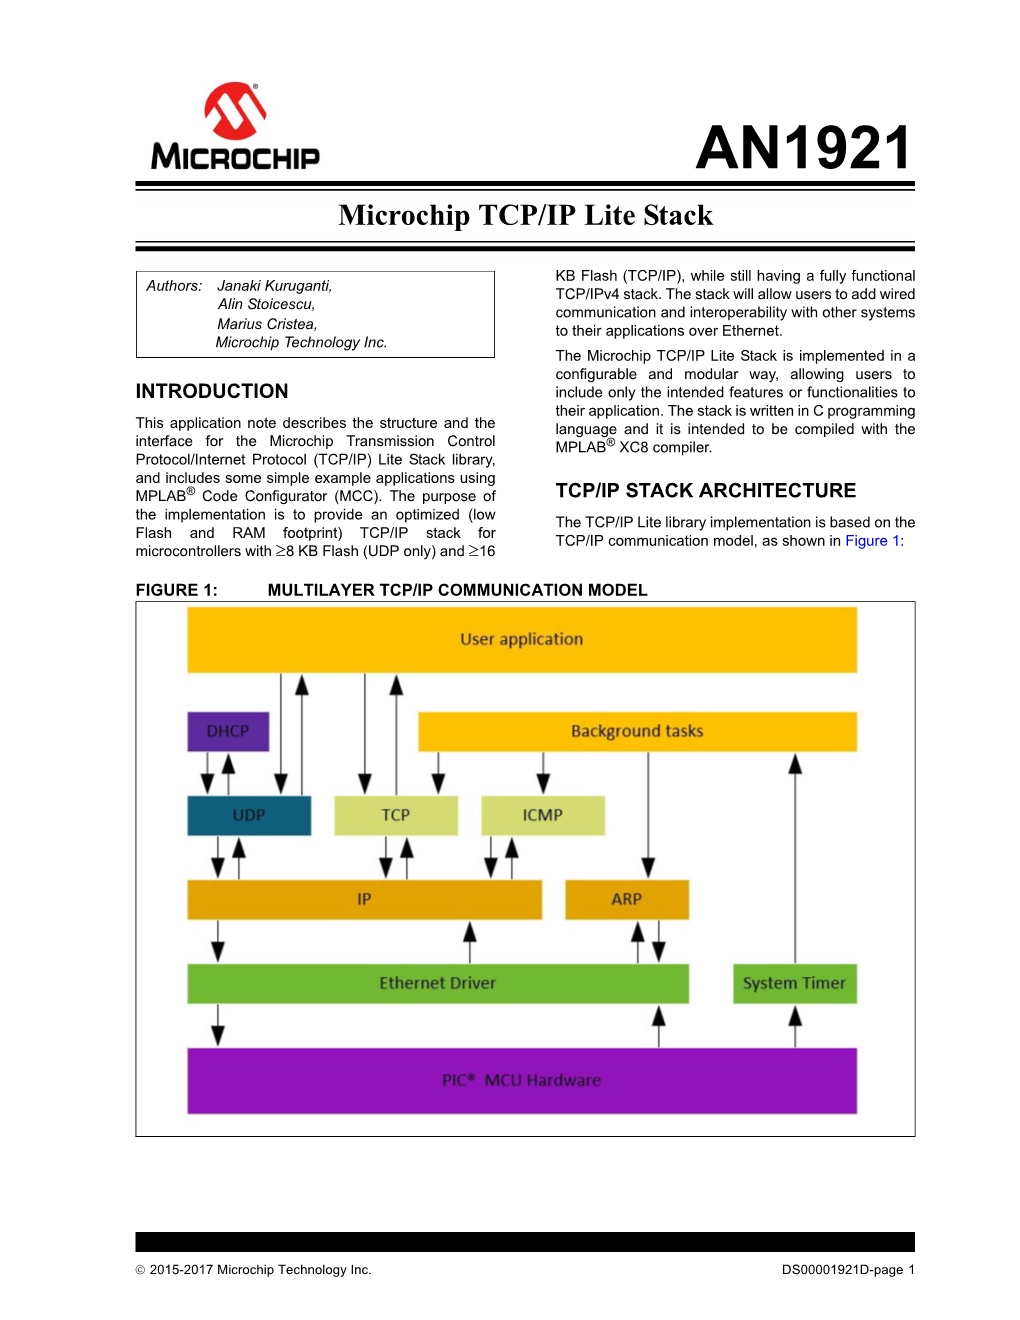 AN1921 – Microchip TCP/IP Lite Stack